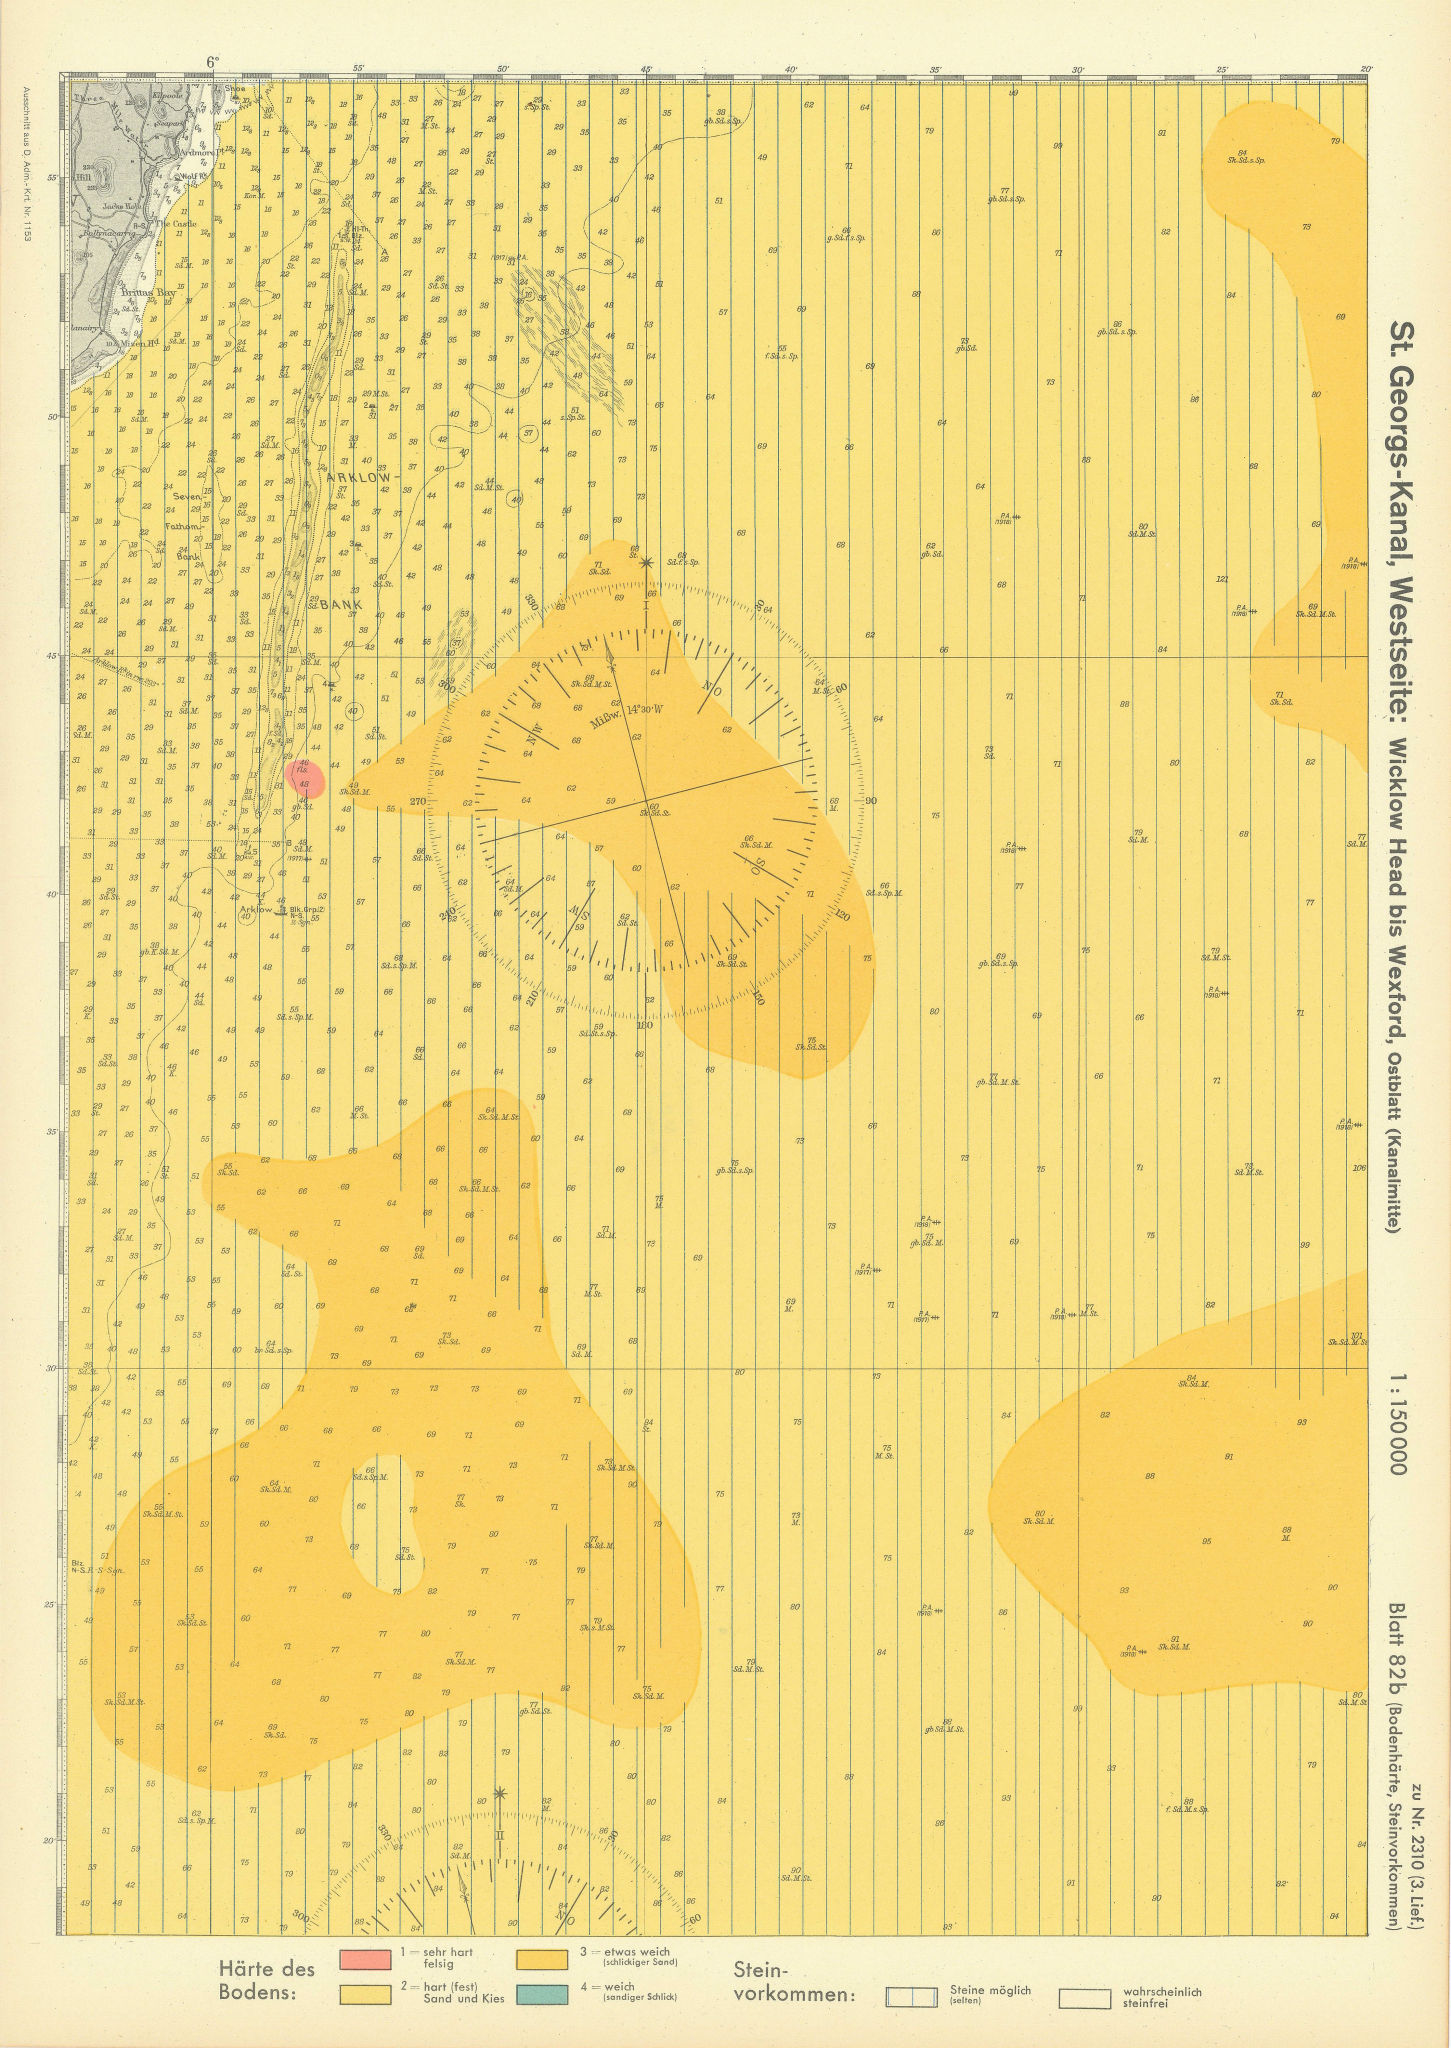 82b. Ireland coast Irish Sea Arklow Bank Wicklow. KRIEGSMARINE Nazi map 1940